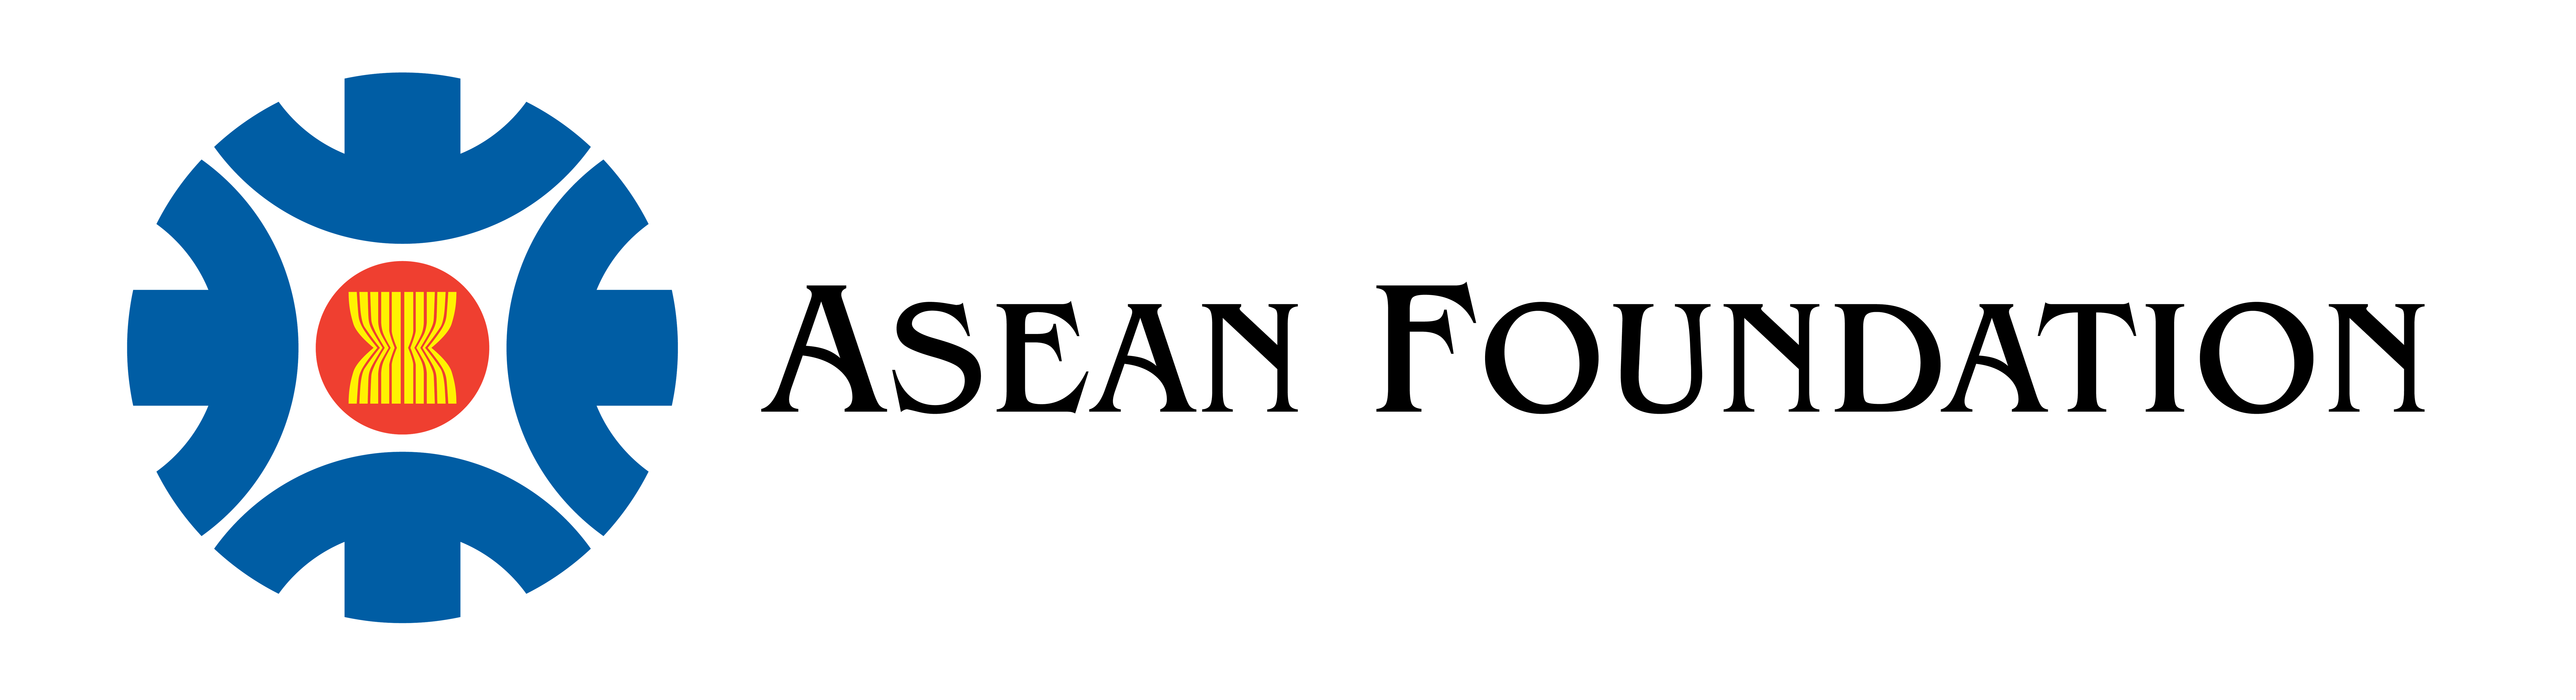 ASEAN Foundation Logo